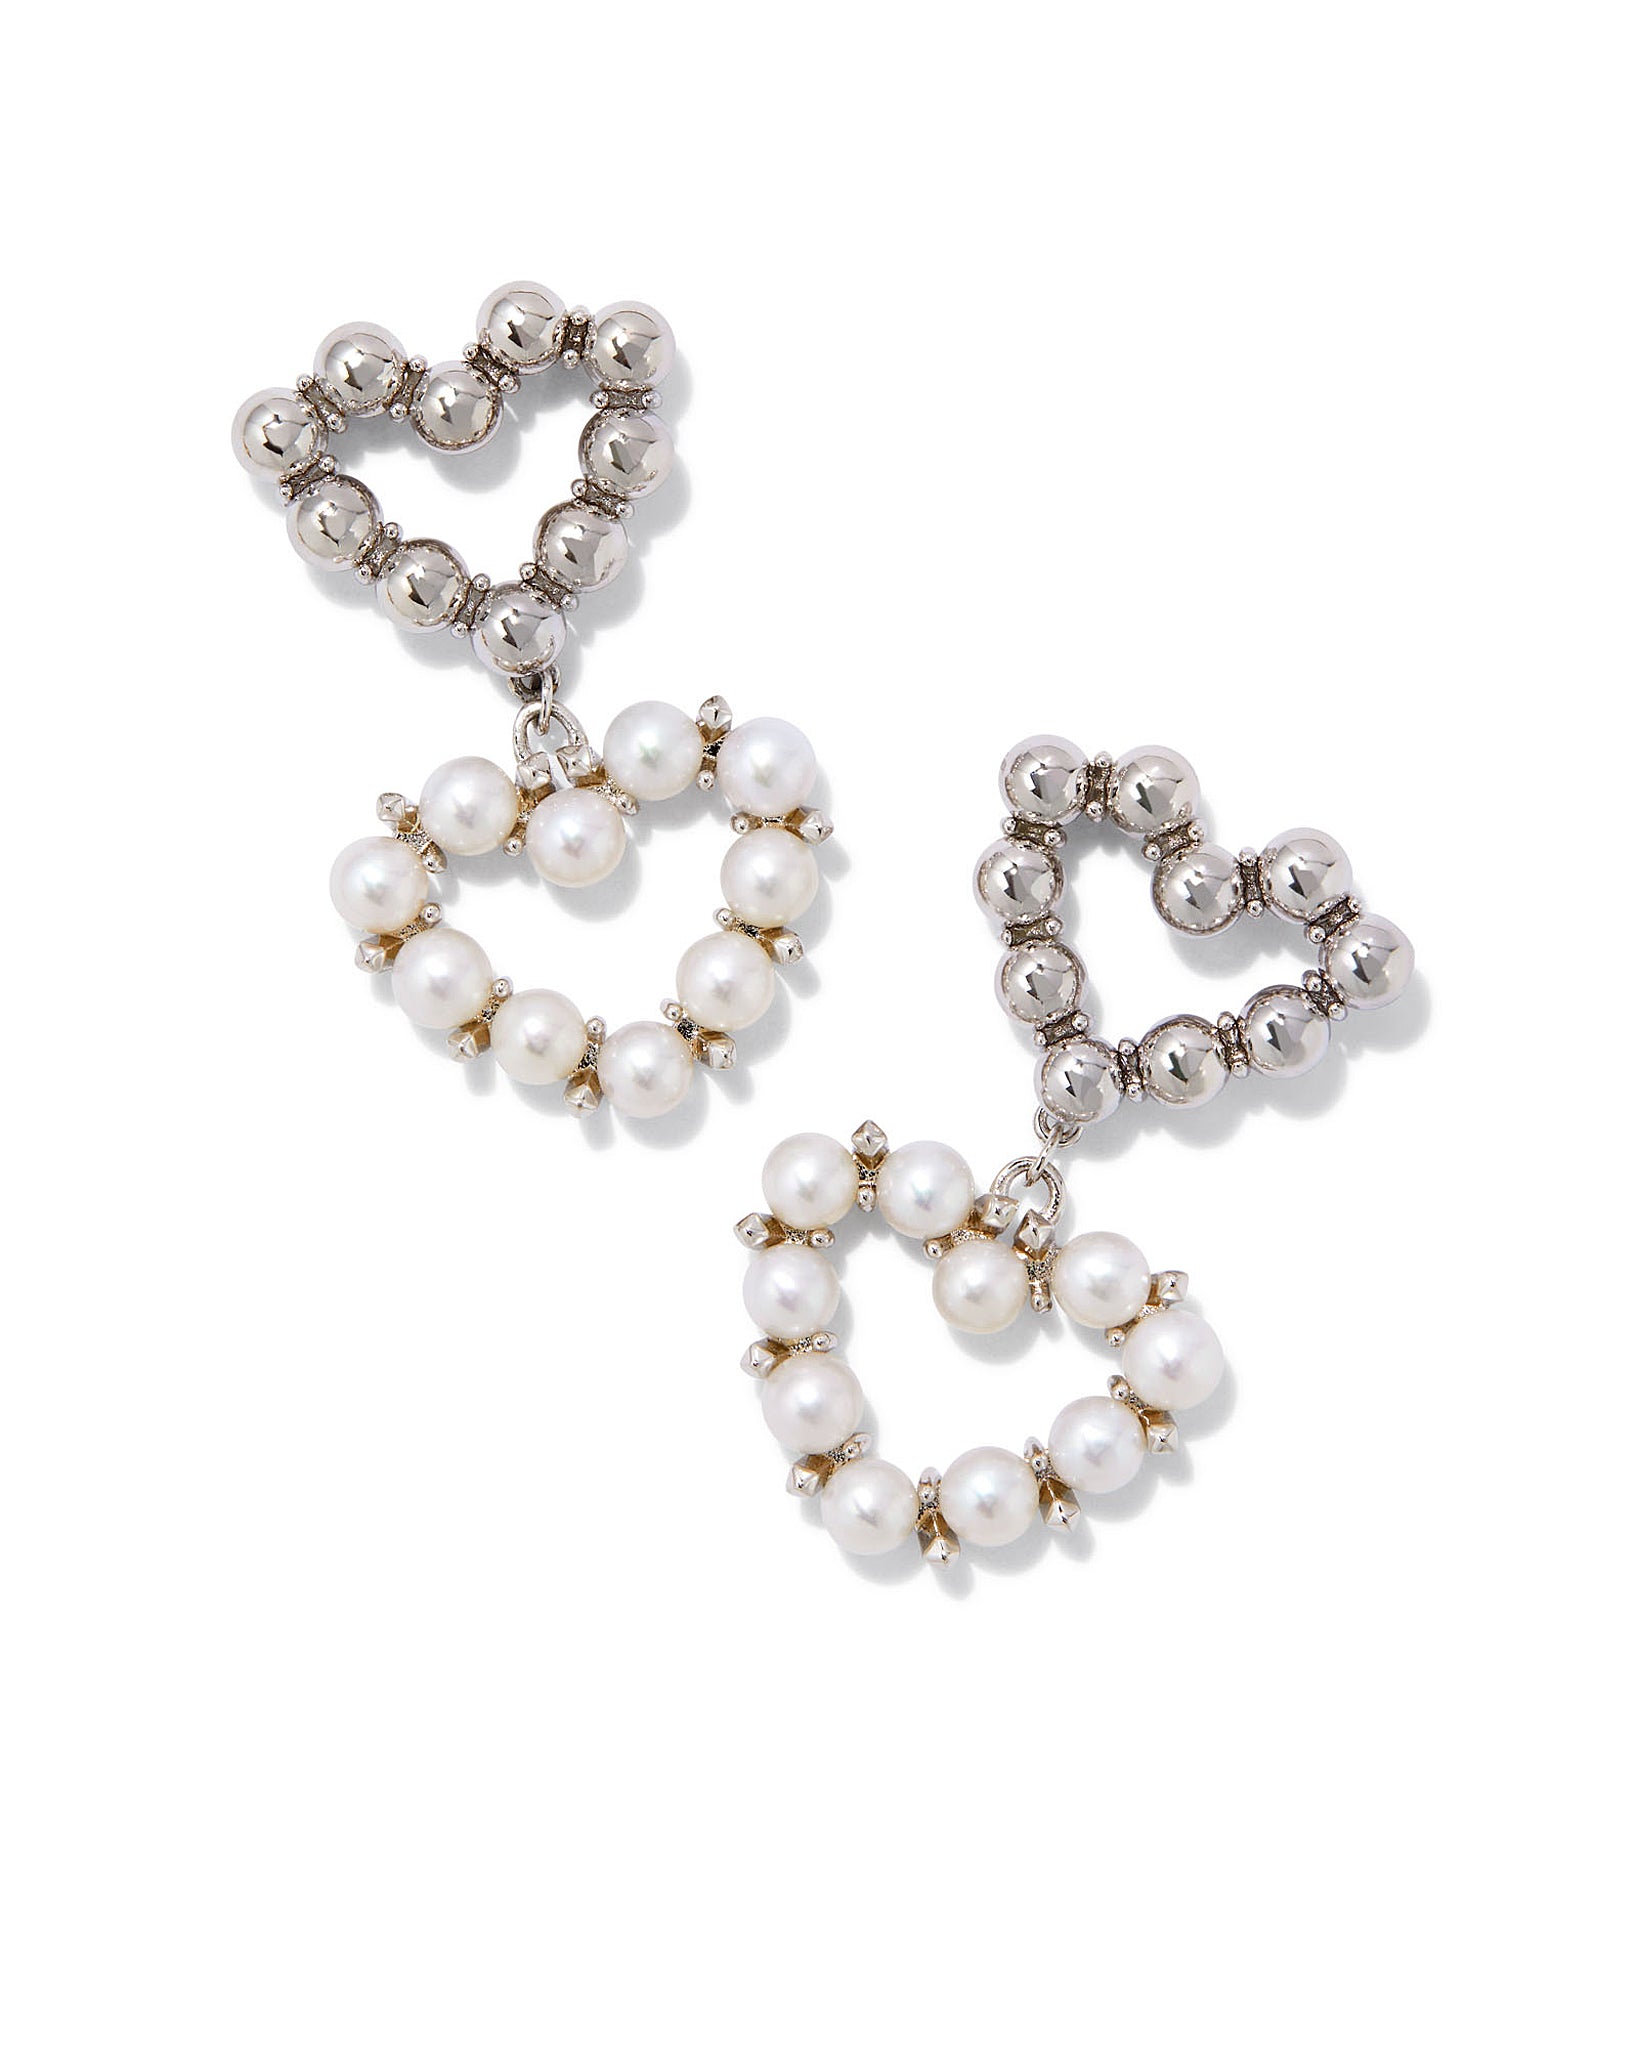 Kendra Scott Ashton Heart Earrings in White Pearl and Rhodium Plated